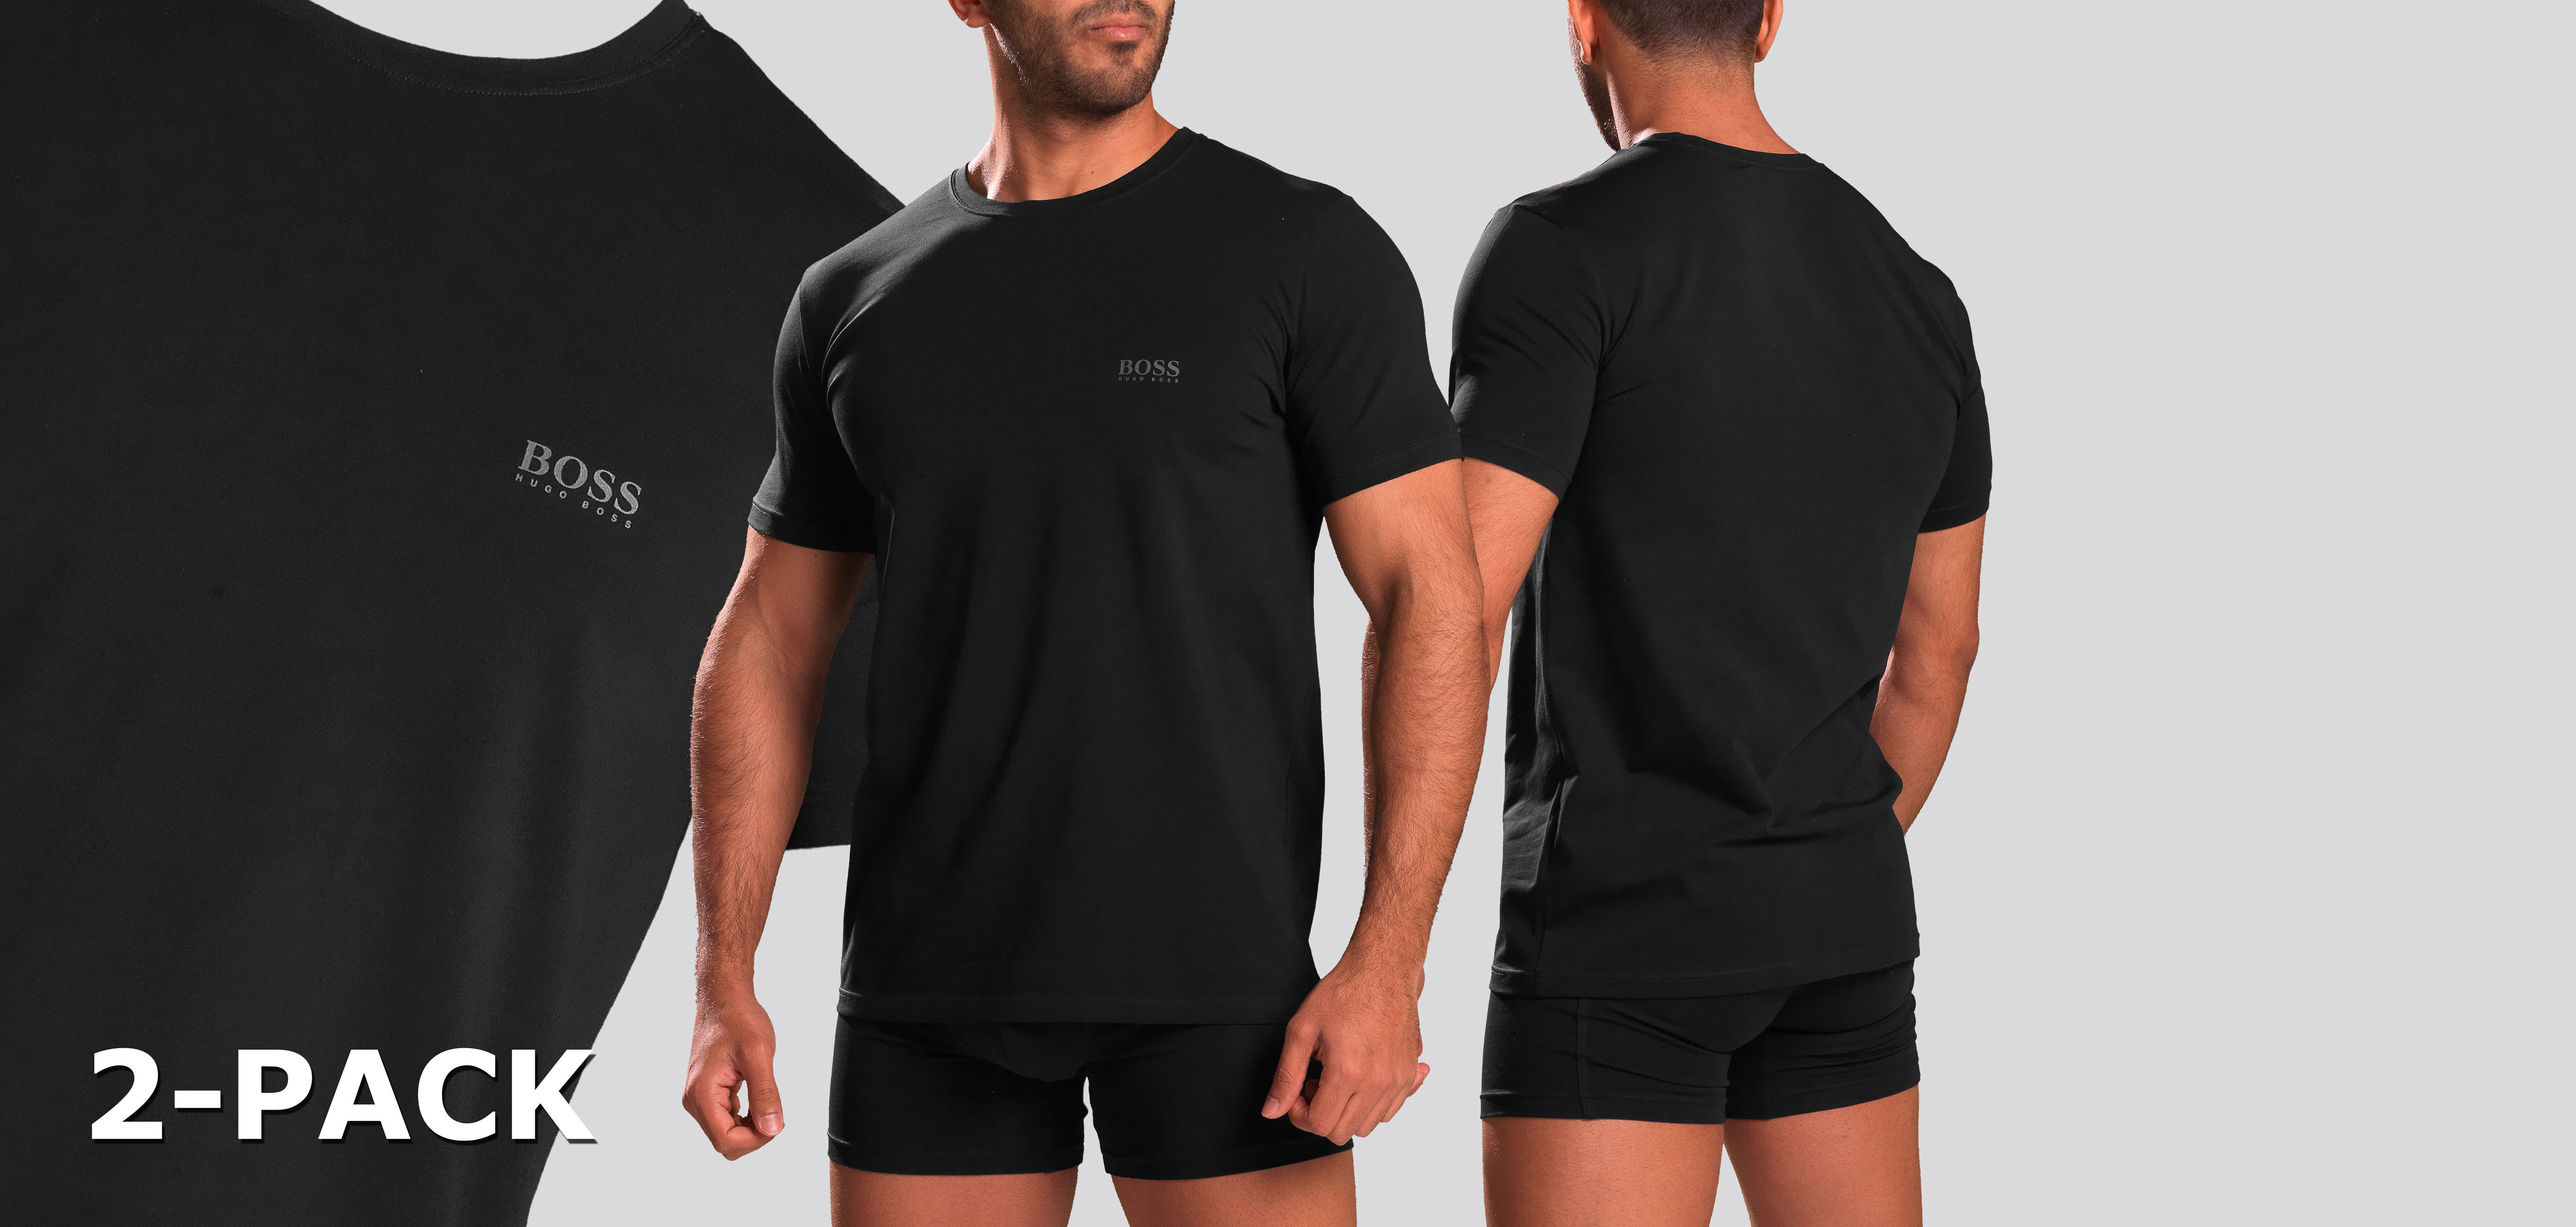 Boss RN Cotton Stretch T-Shirt 2-Pack 405